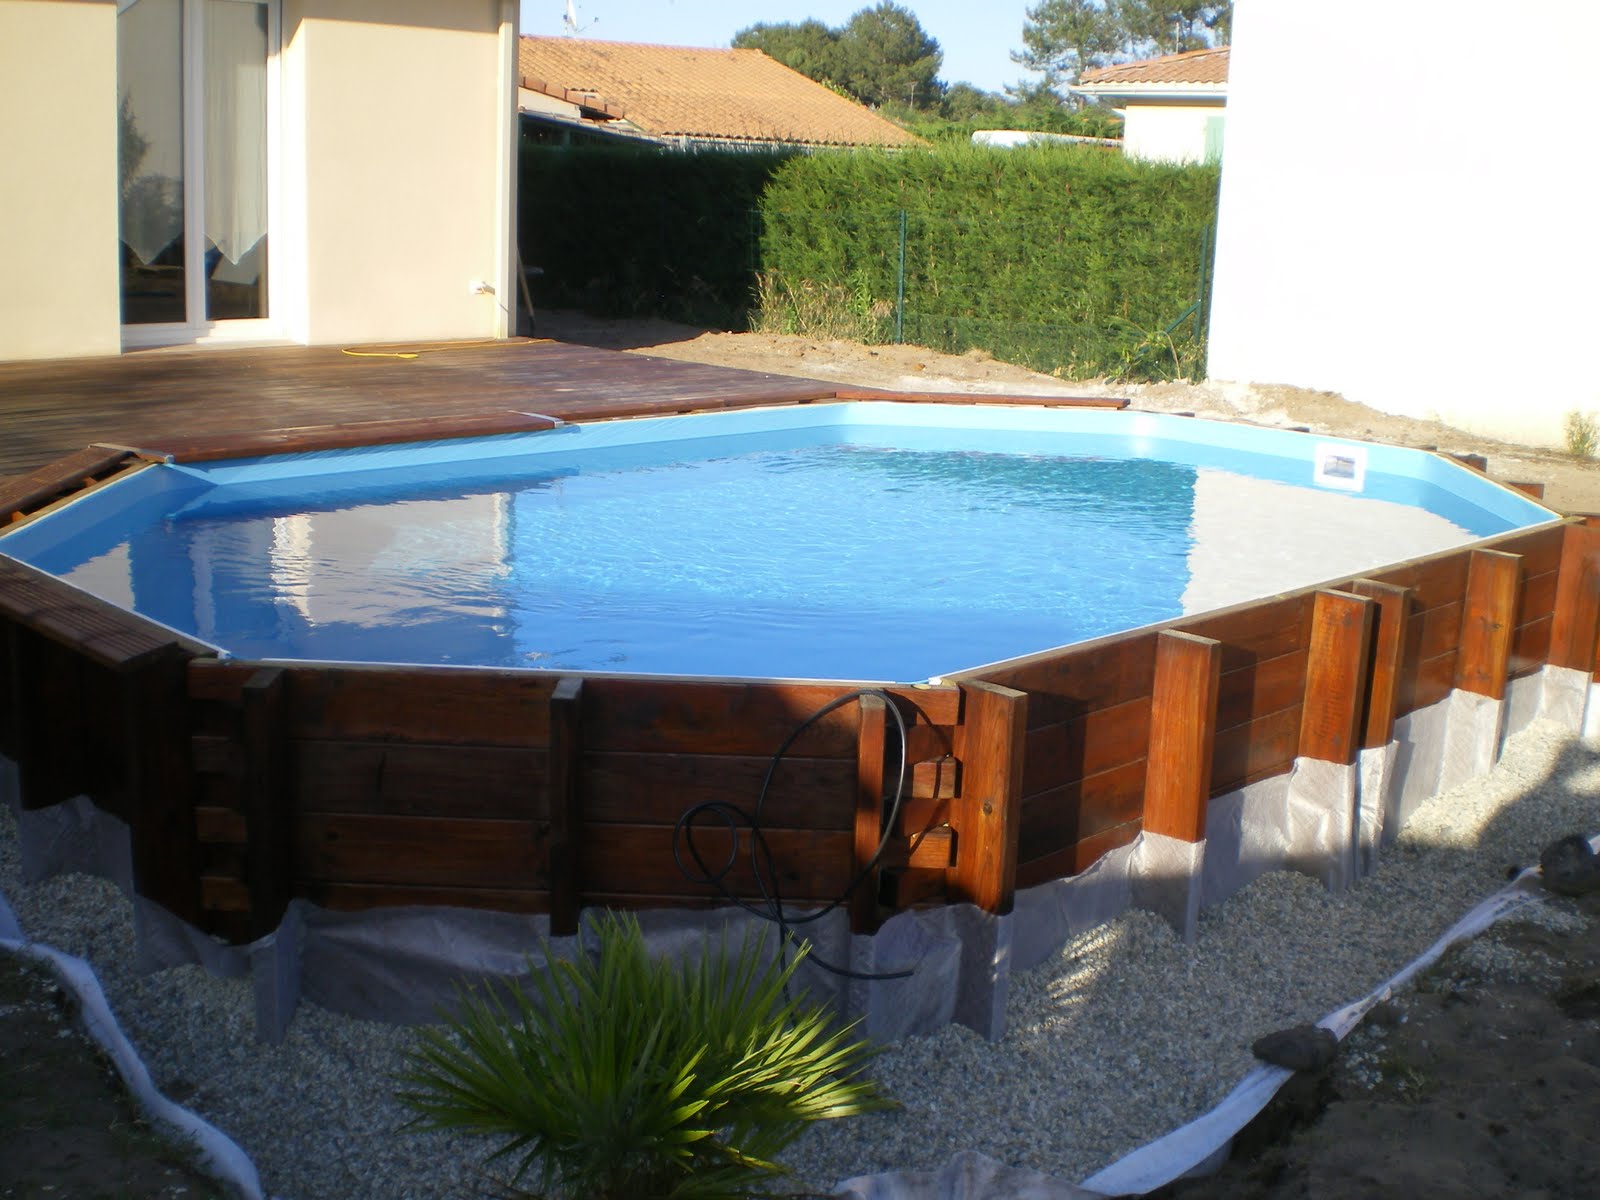 Piscine bois rectangulaire piscine hors sol bois rectangulaire piscine 